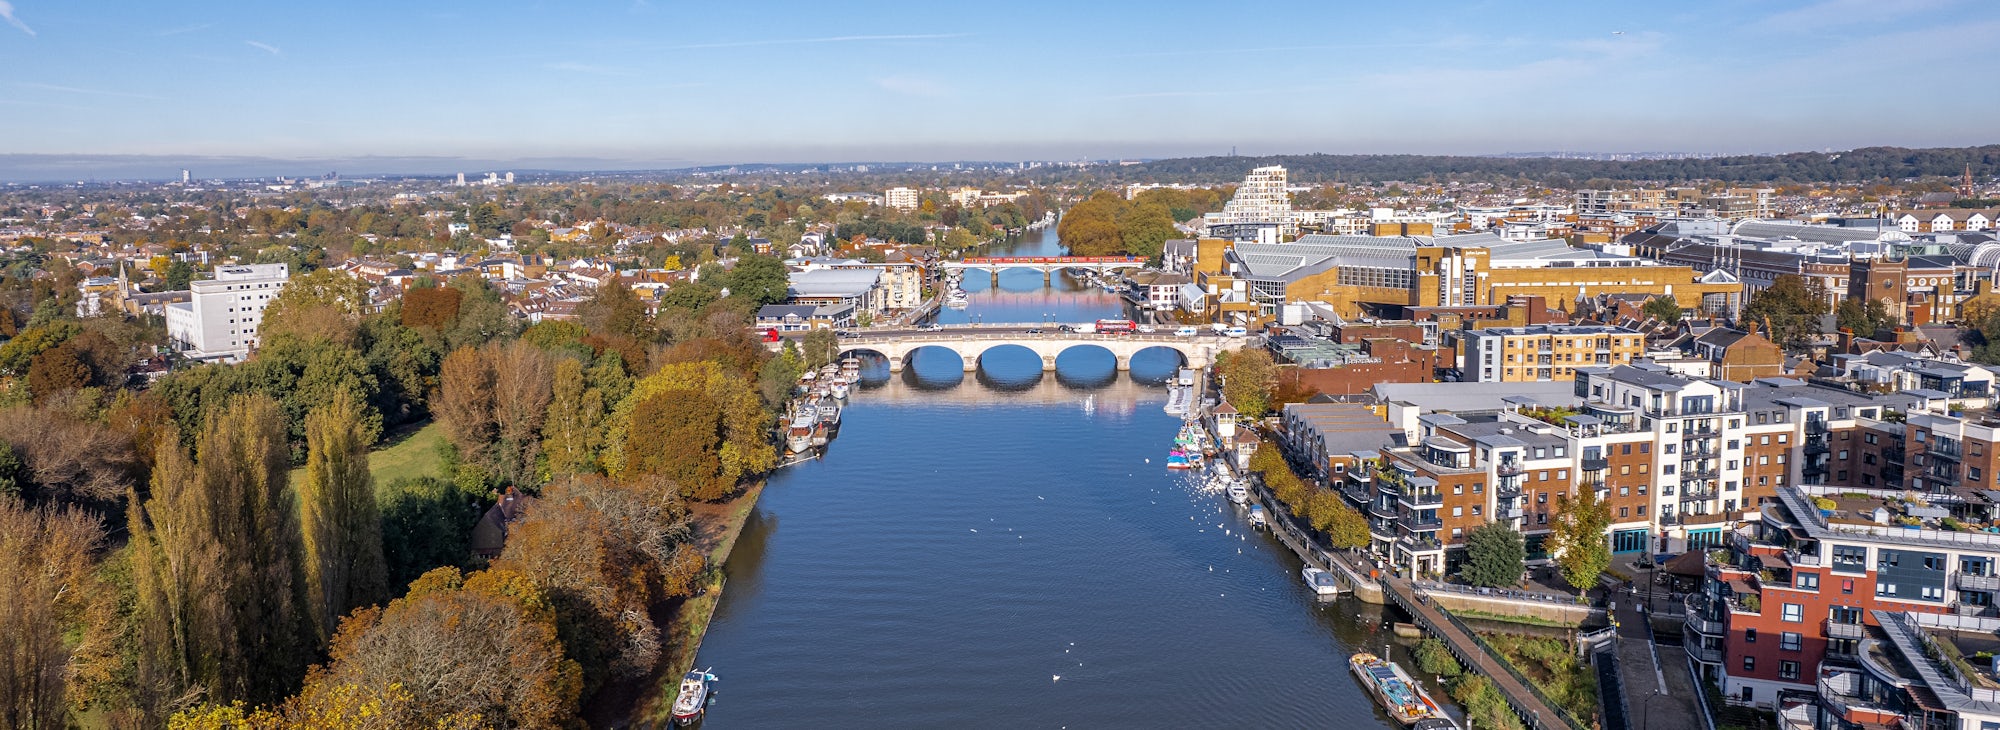 Aerial View of Kingston Bridge across River Thames